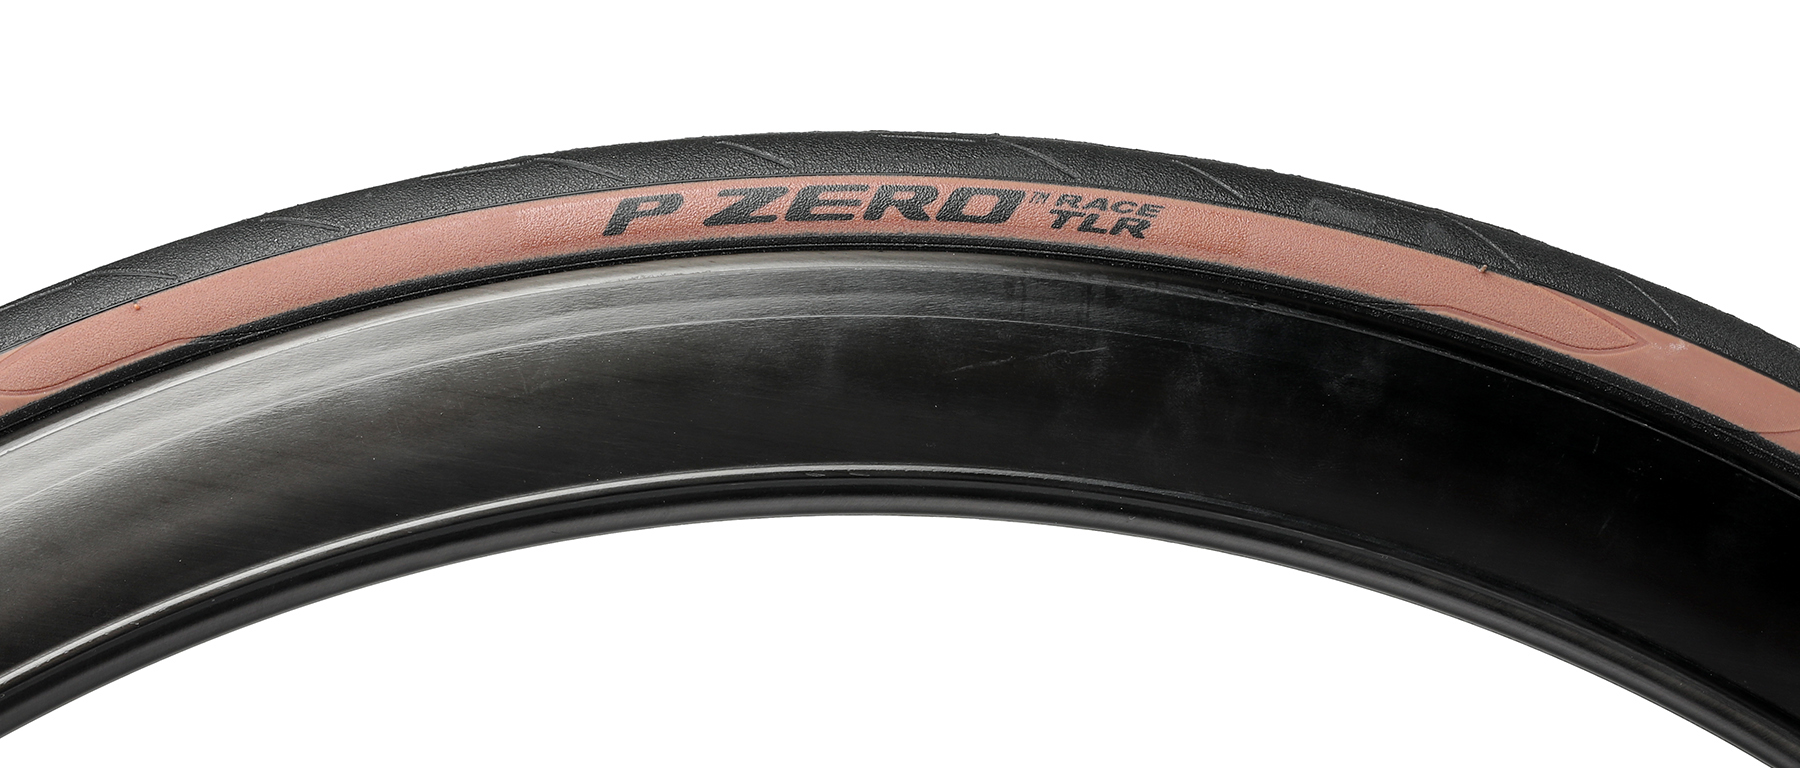 Pirelli P Zero Race TLR Tubeless Tire 2-Pack